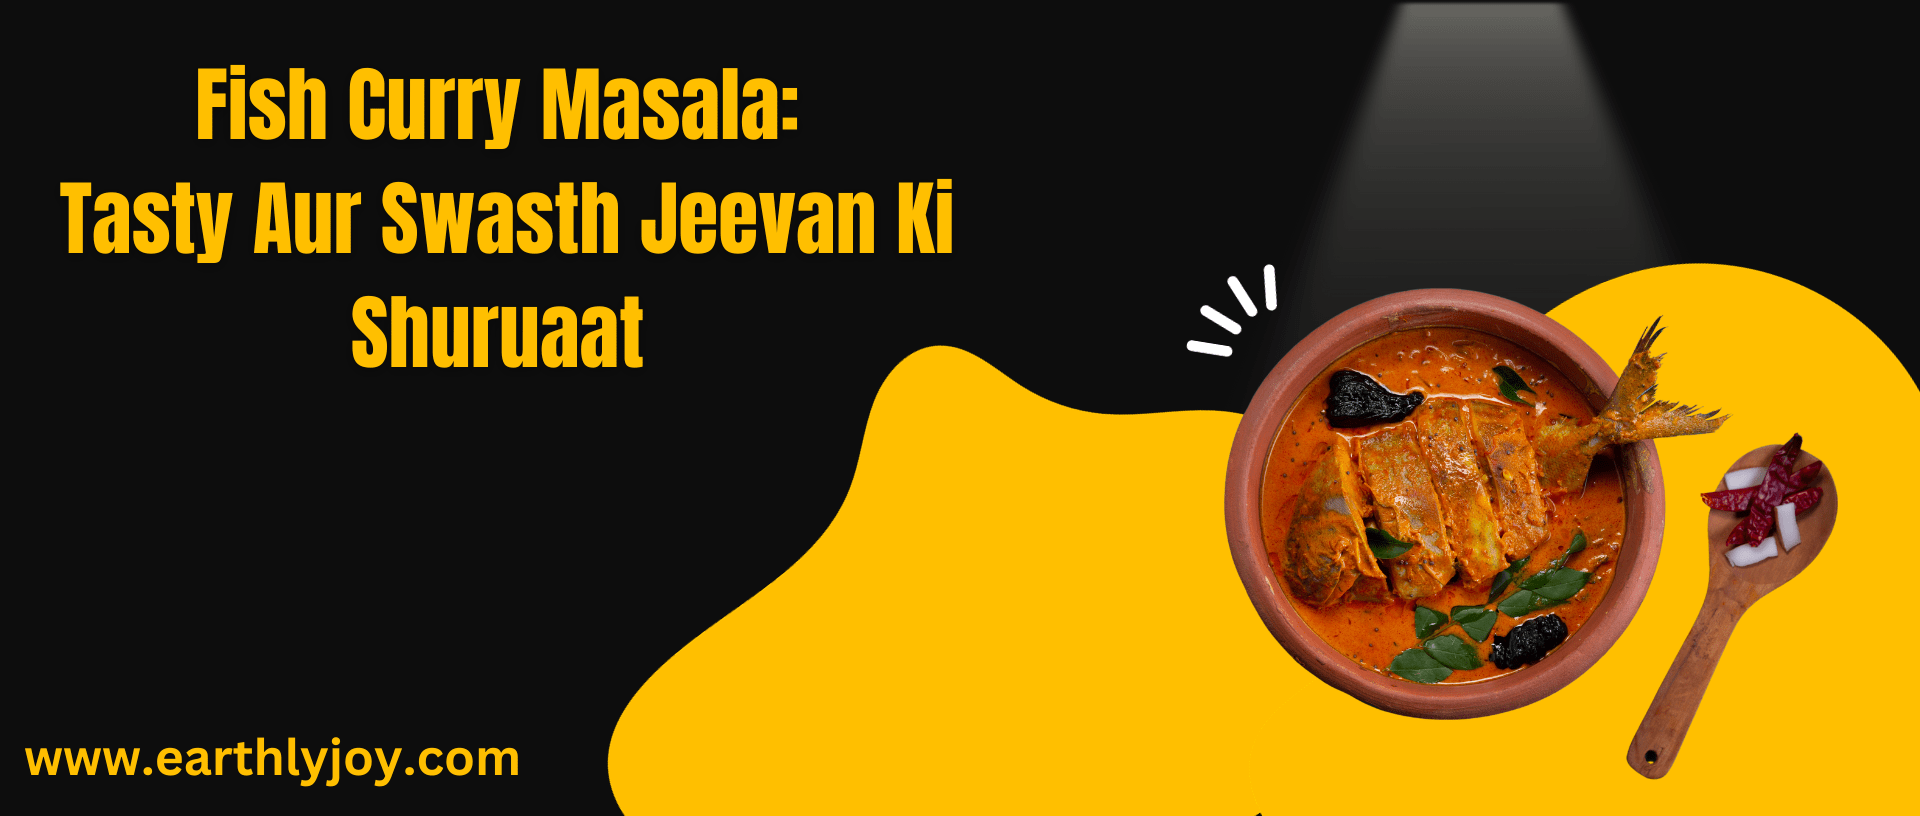 Fish Curry Masala: Tasty Aur Swasth Jeevan Ki Shuruaat